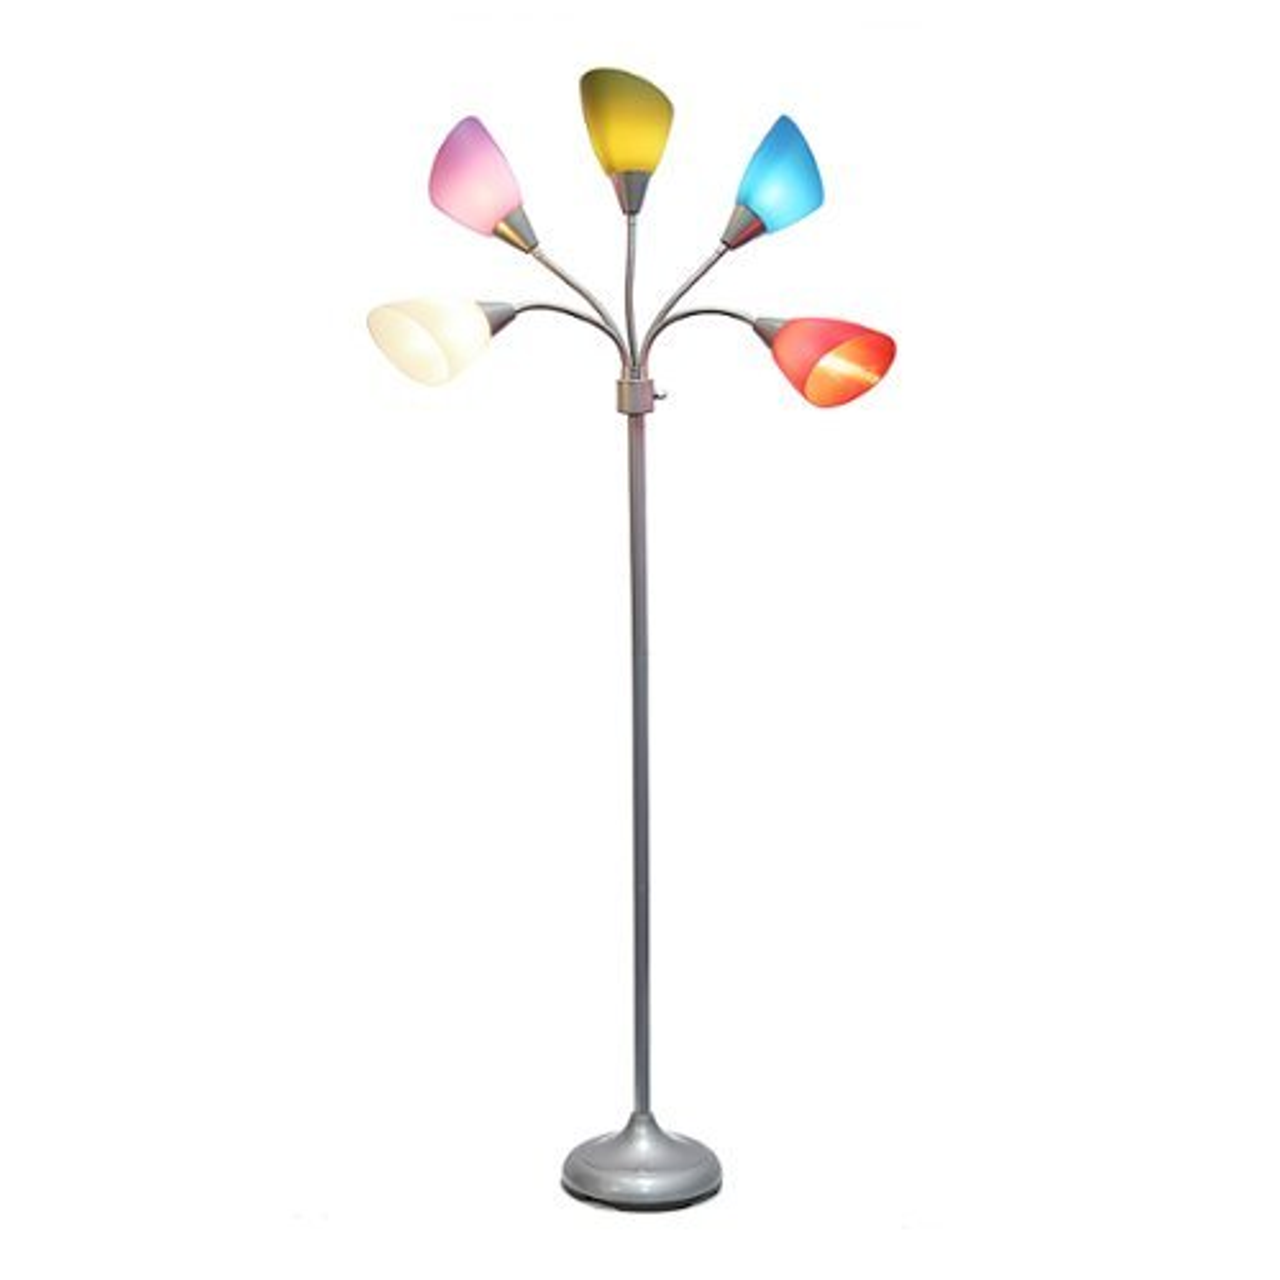 Simple Designs 5 Light Adjustable Gooseneck Floor Lamp - Silver/Primary Multicolored Shades